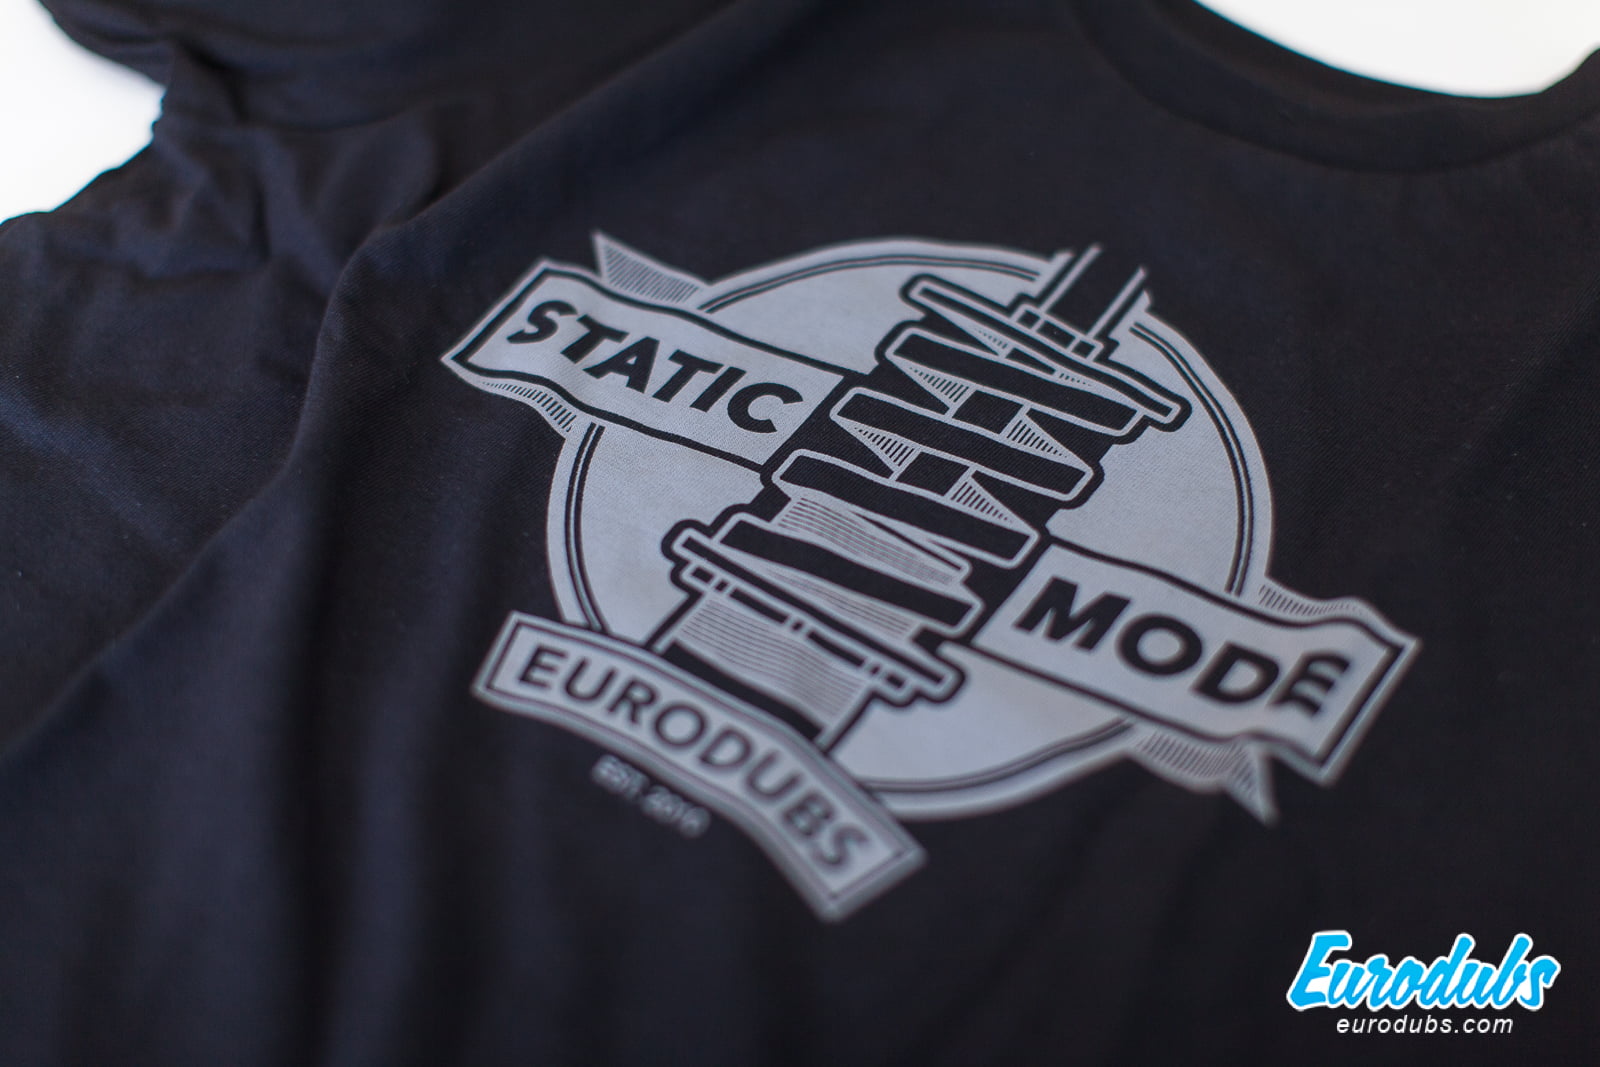 Eurodubs t-shirt Static Mode